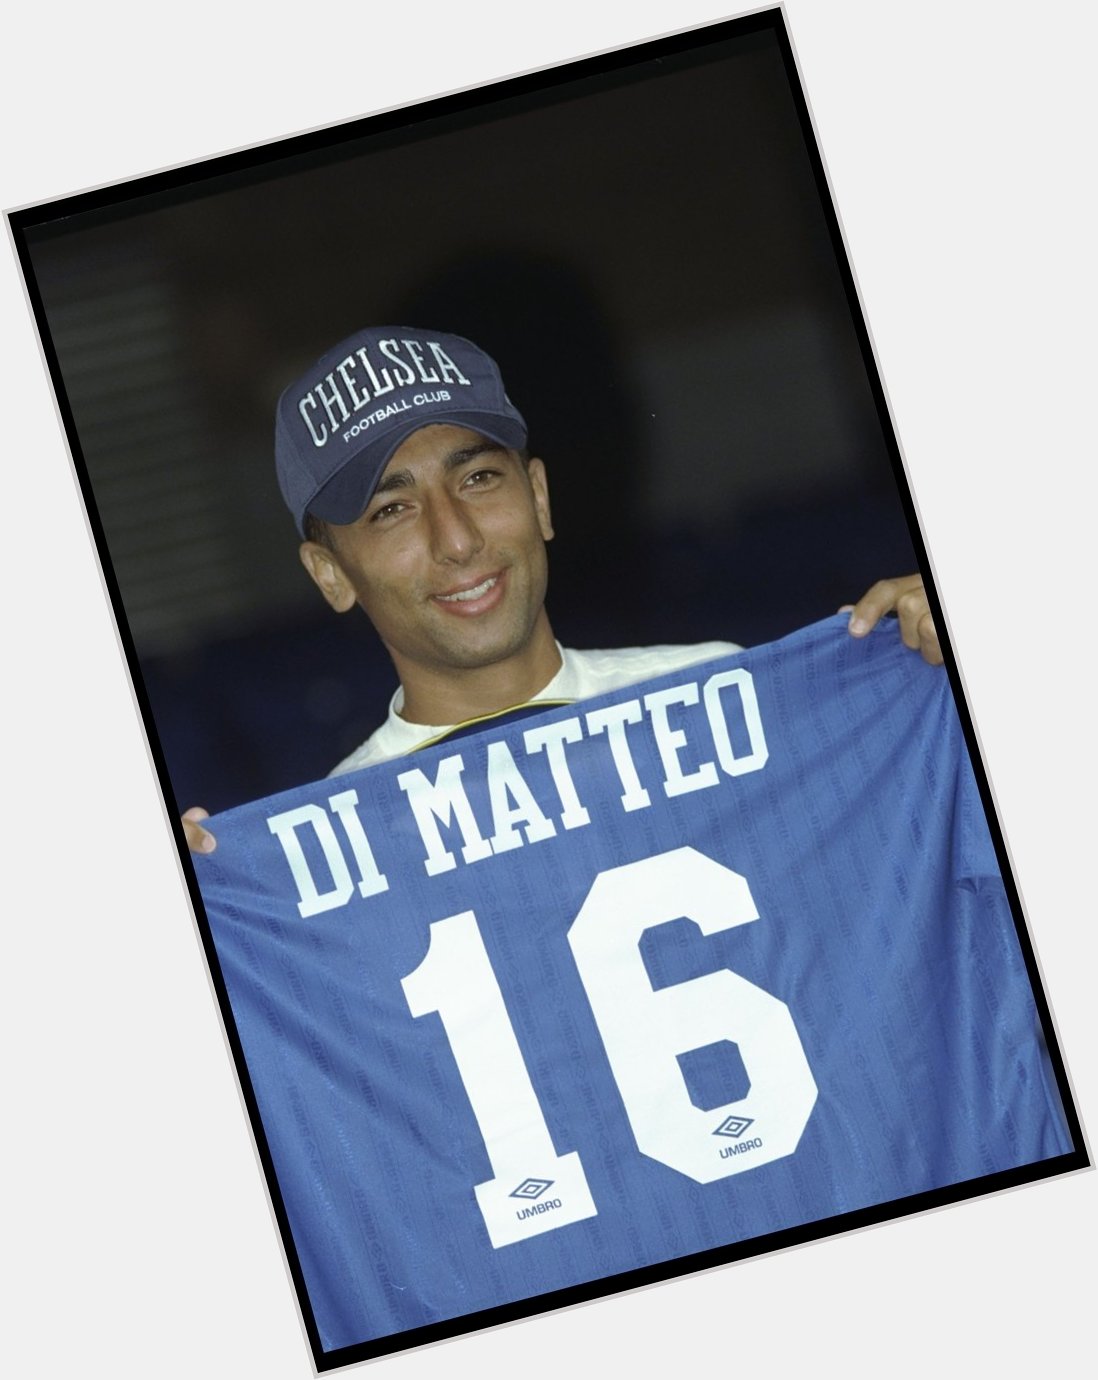  Happy birthday, Chelsea legend Roberto Di Matteo! 